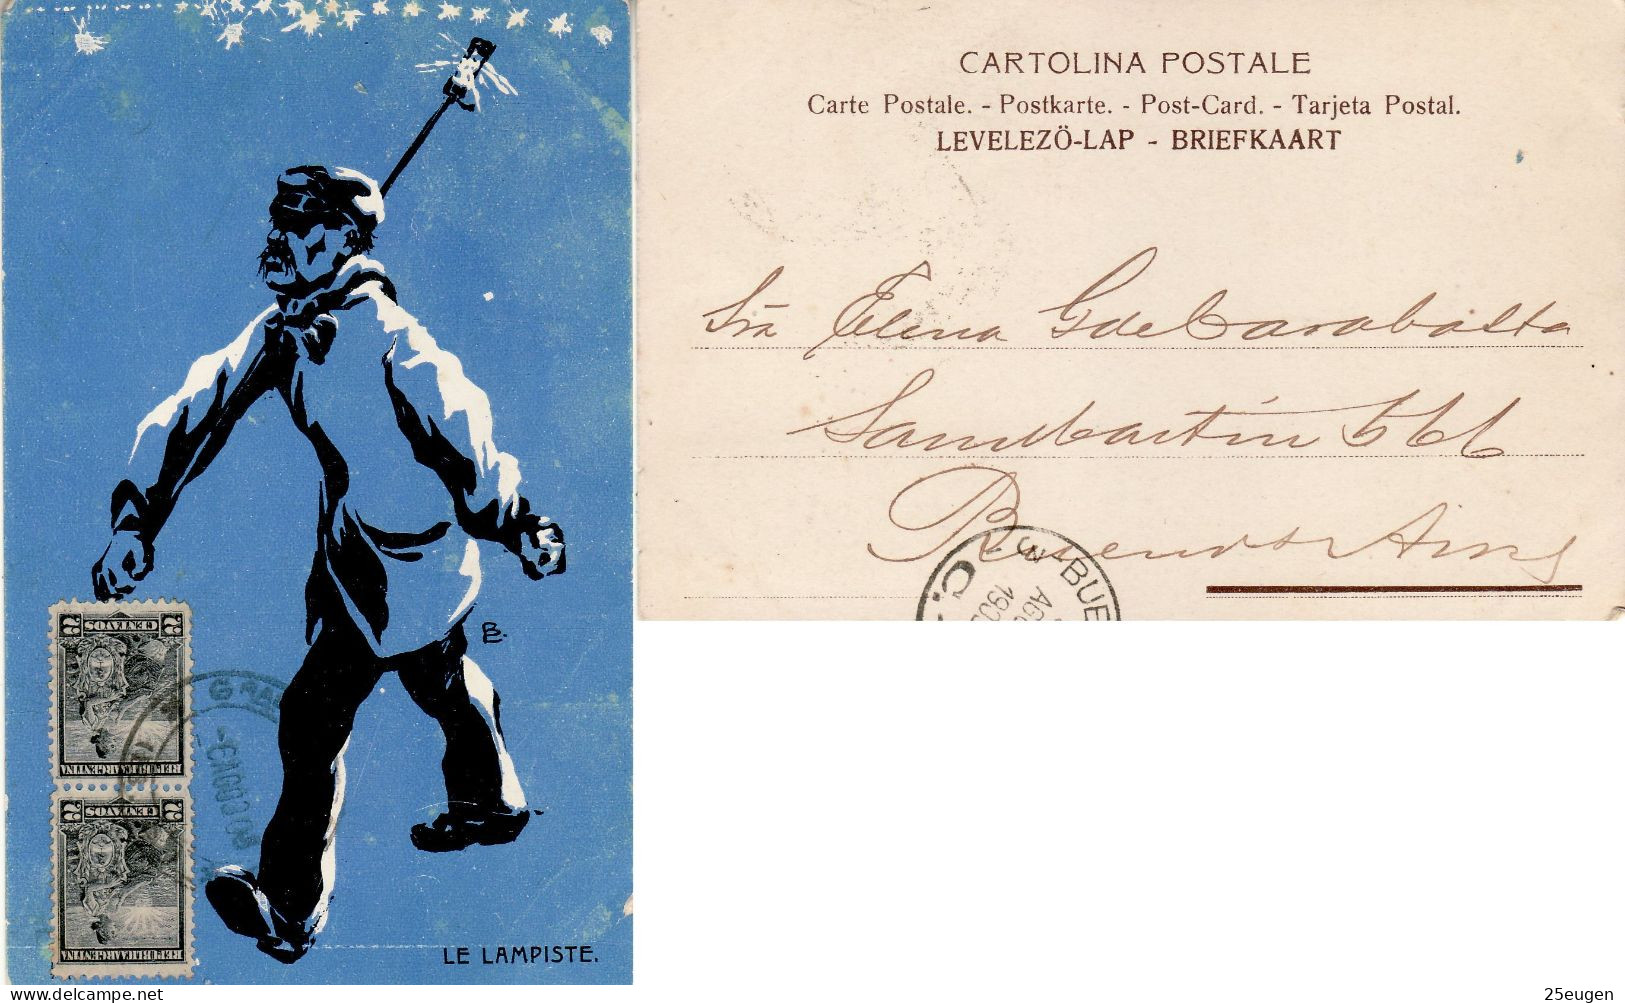 ARGENTINA 1903 POSTCARD SENT TO BUENOS AIRES - Storia Postale